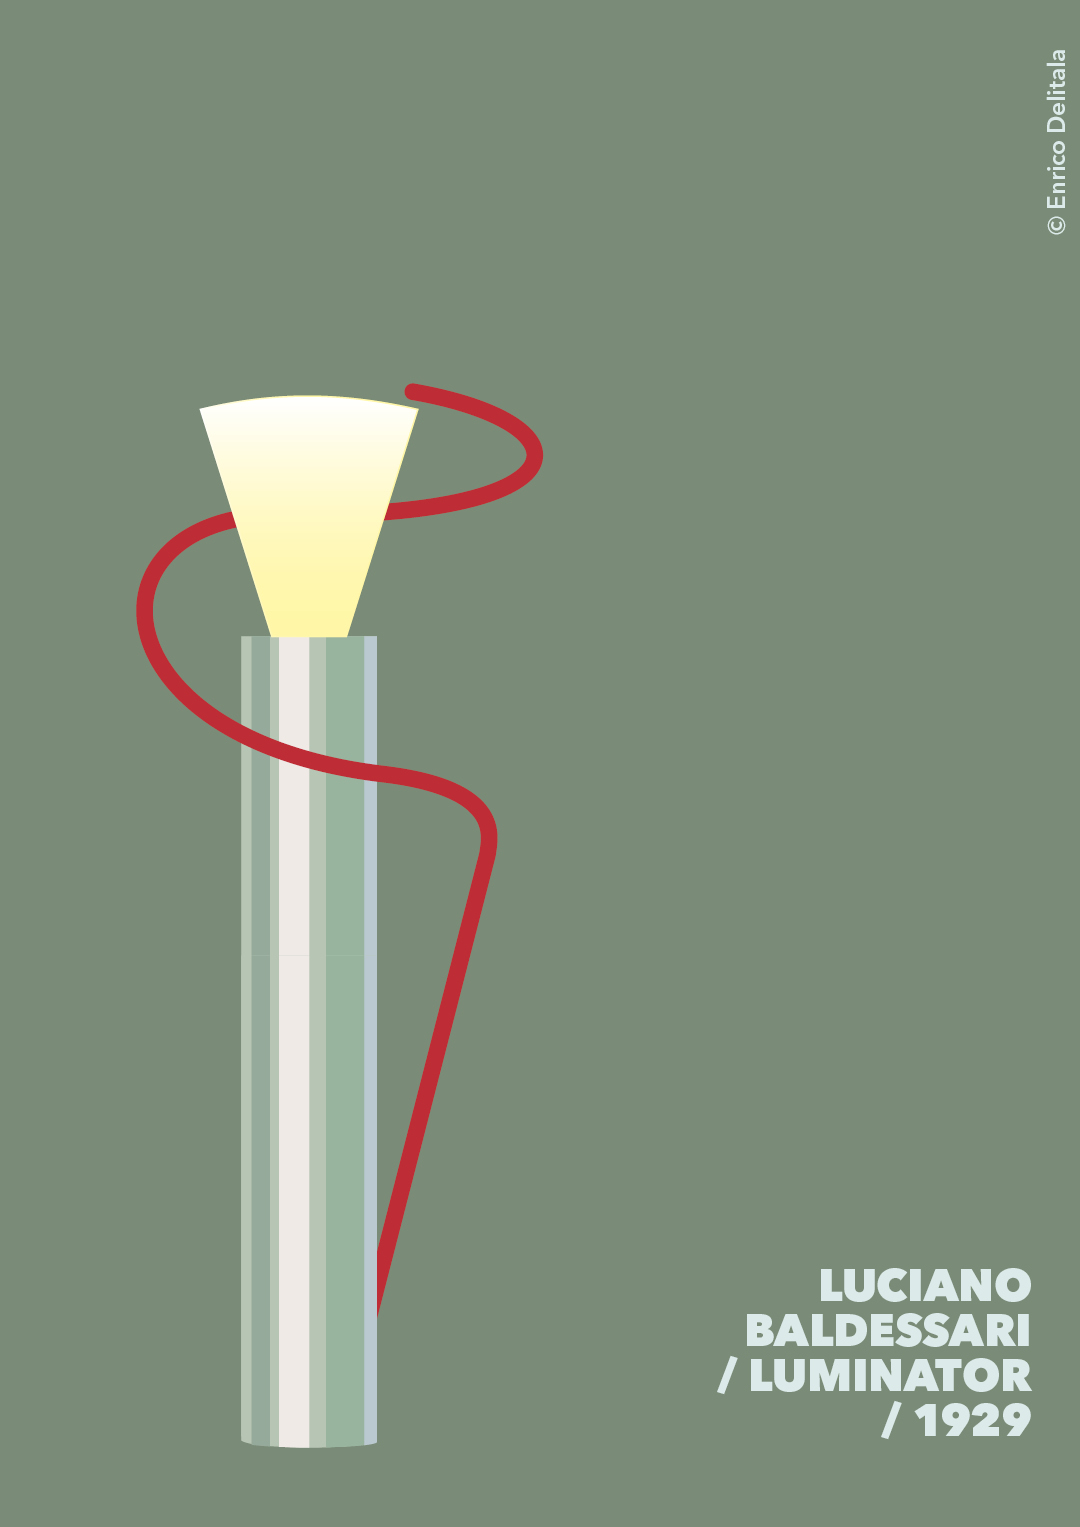 Luminator: Enrico Delitala Enrico Delitala illustrator Luciano Baldessari Luminator